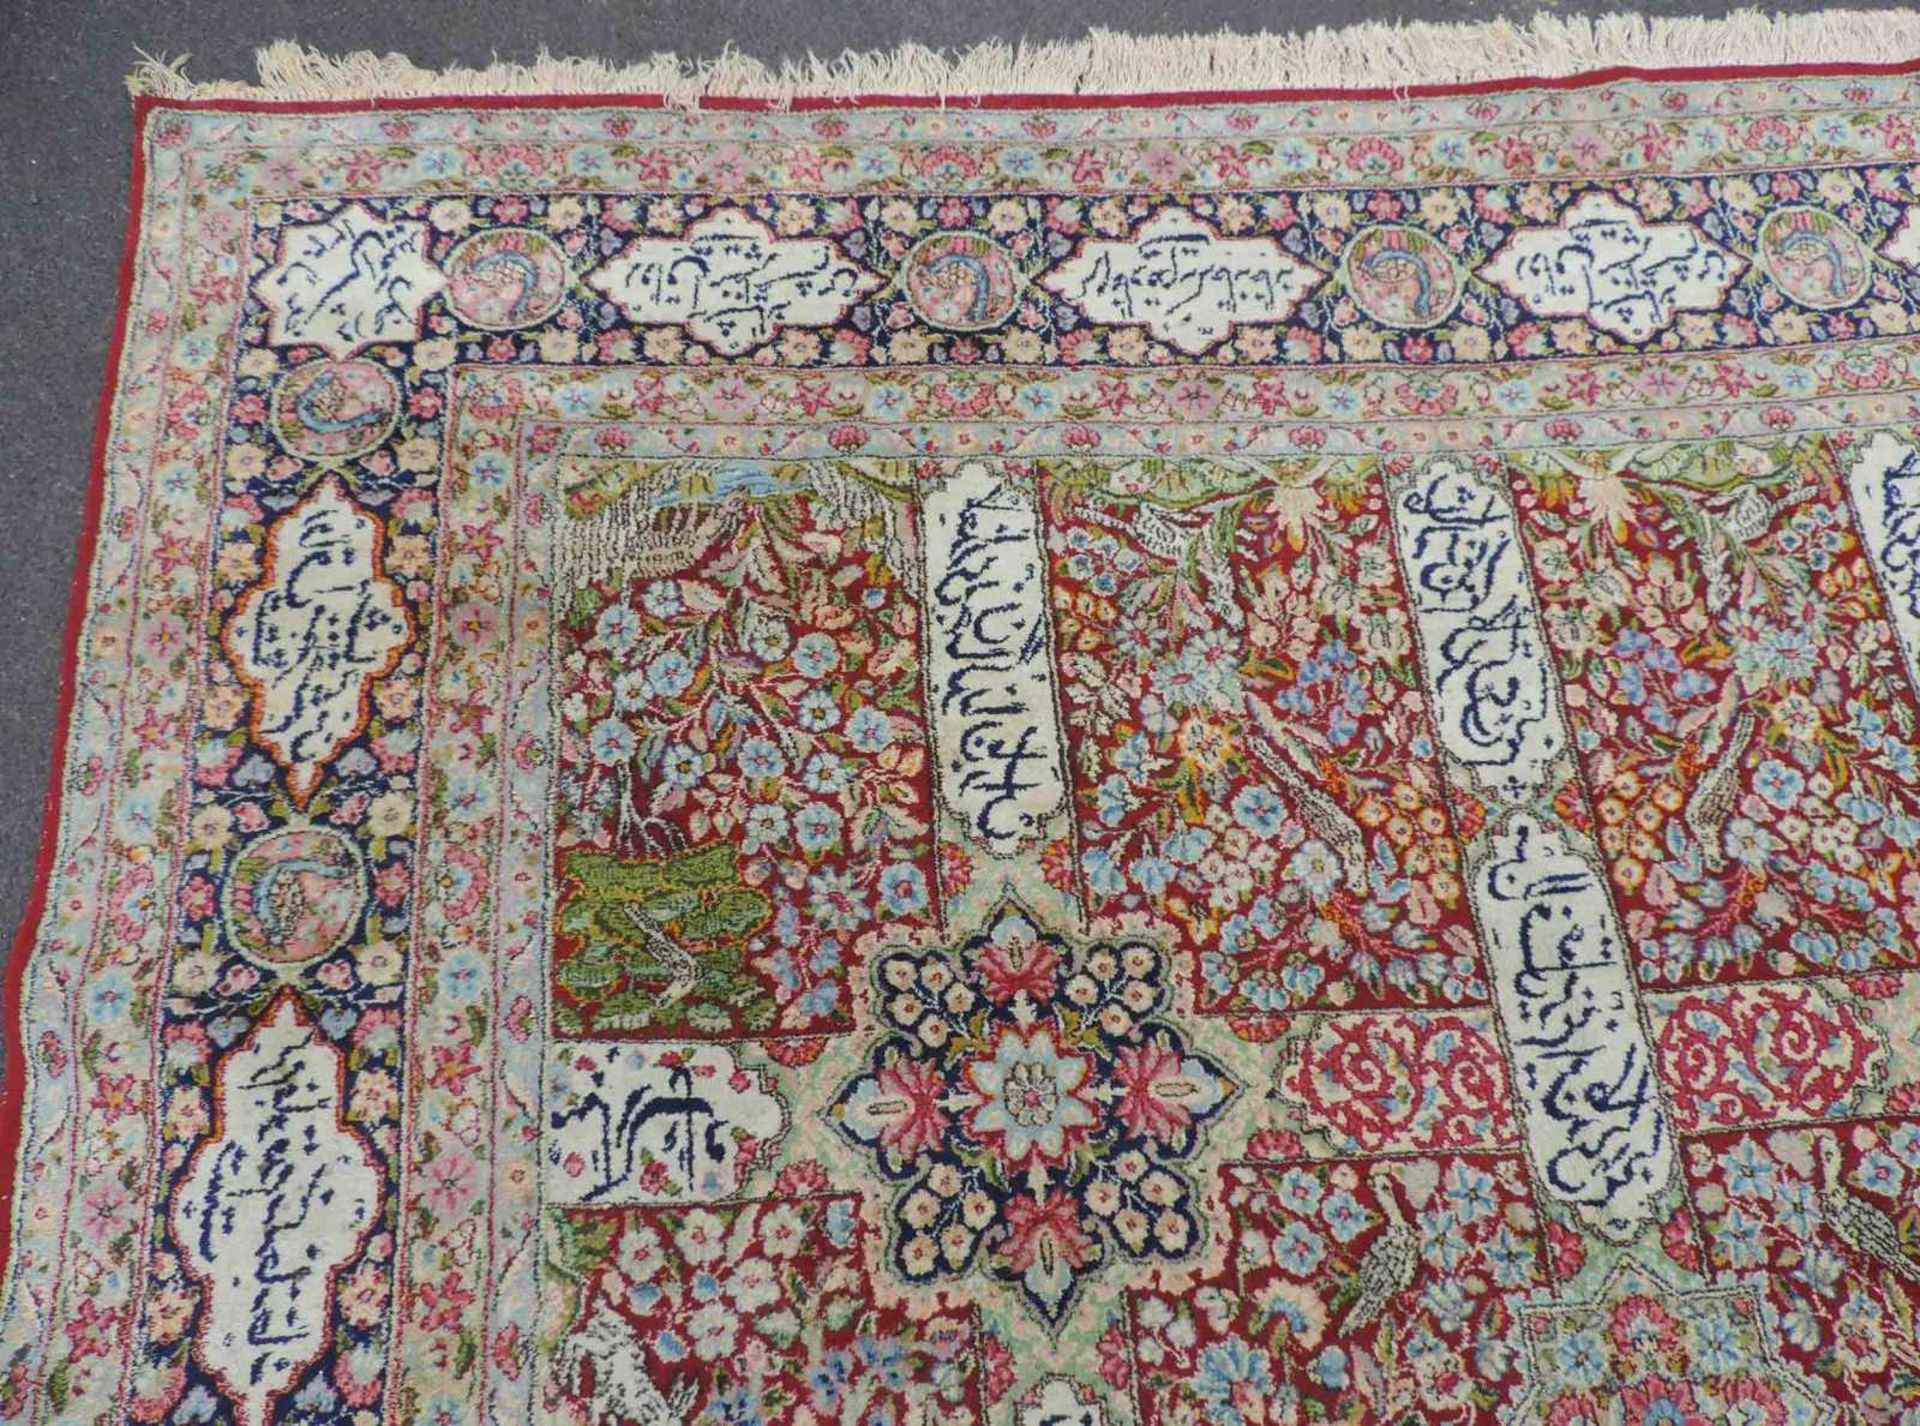 Kirman Garten - Teppich. Iran. Feine Knüpfung. Datiert 1390 (1972). 342 cm x 248 cm. Handgeknüpft. - Bild 6 aus 8